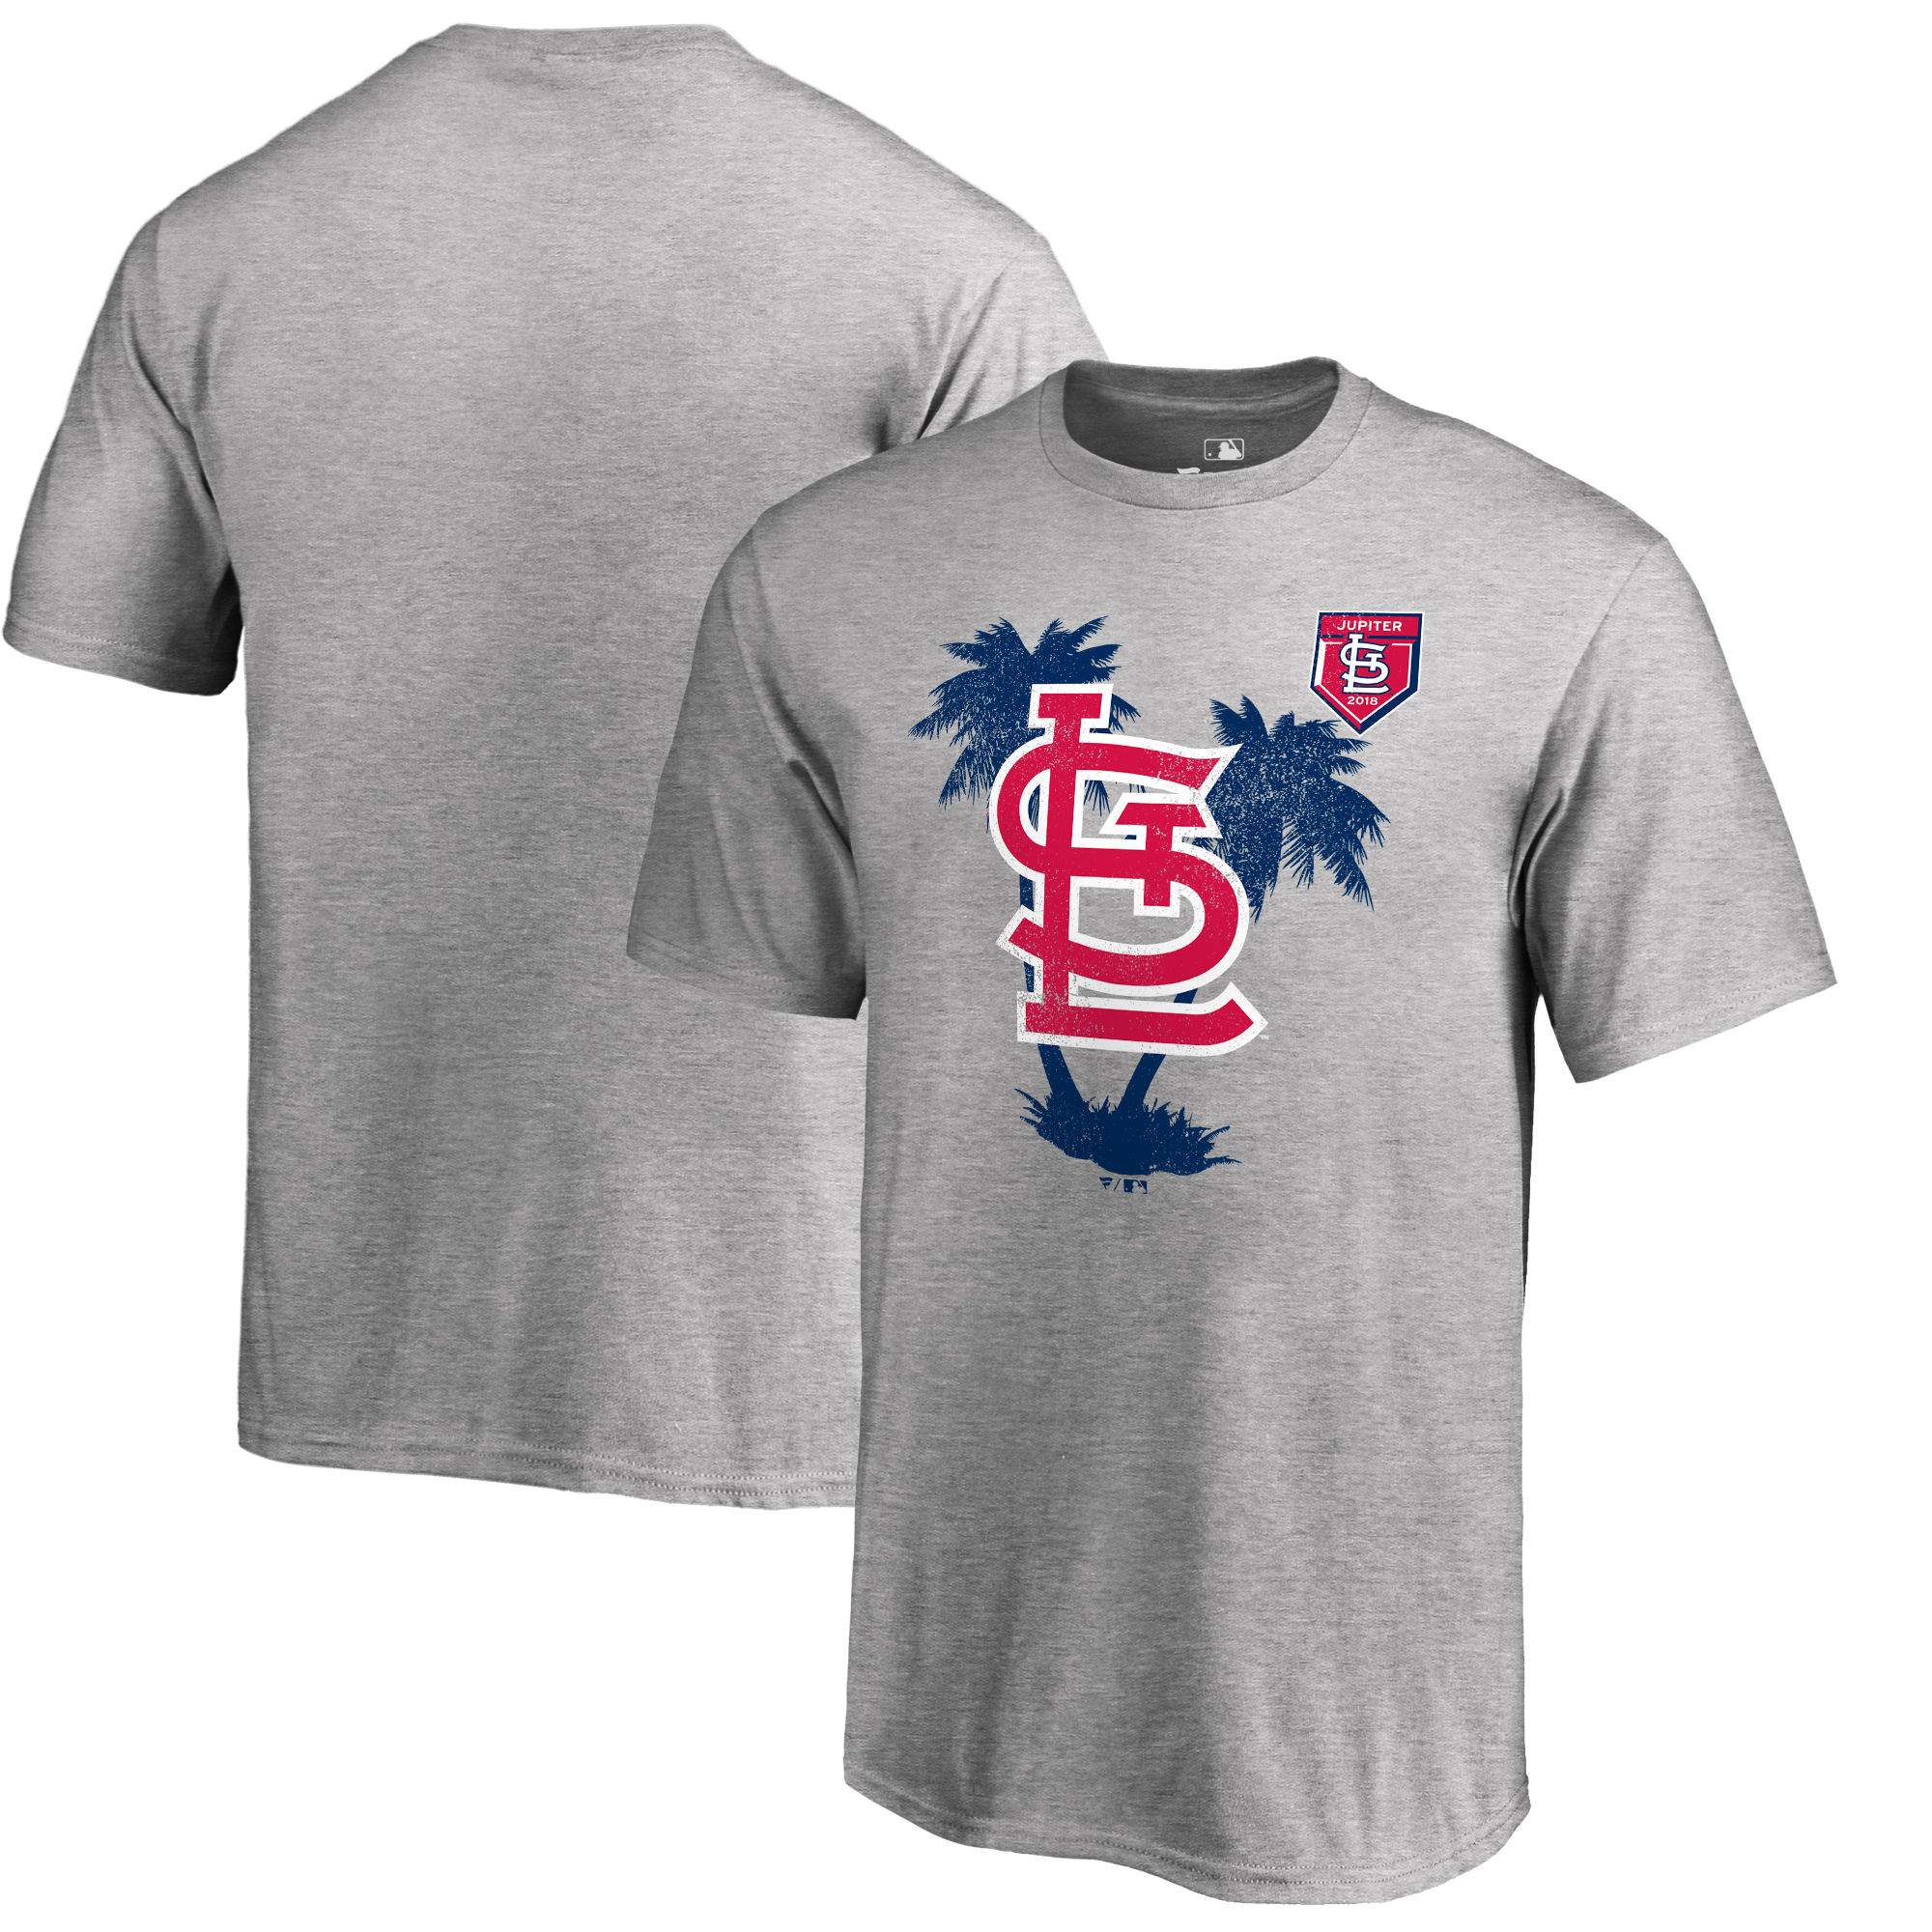 Men's St. Louis Cardinals Fanatics Branded 2018 MLB Spring Training Vintage T-Shirt – Heather Gray